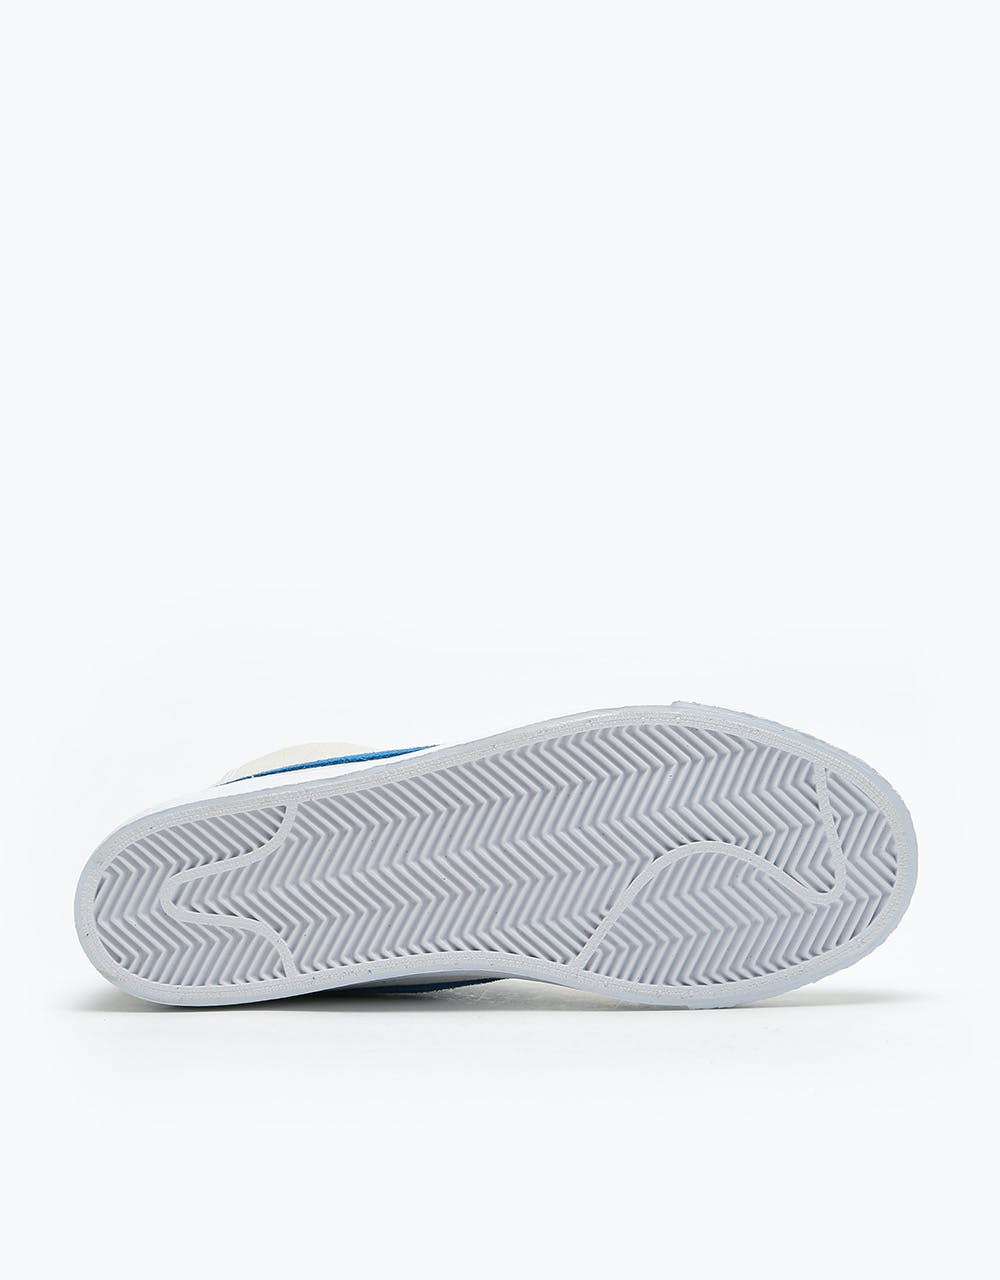 Nike SB Zoom Blazer Mid Skate Shoes - White/Team Royal-White-Cerulean